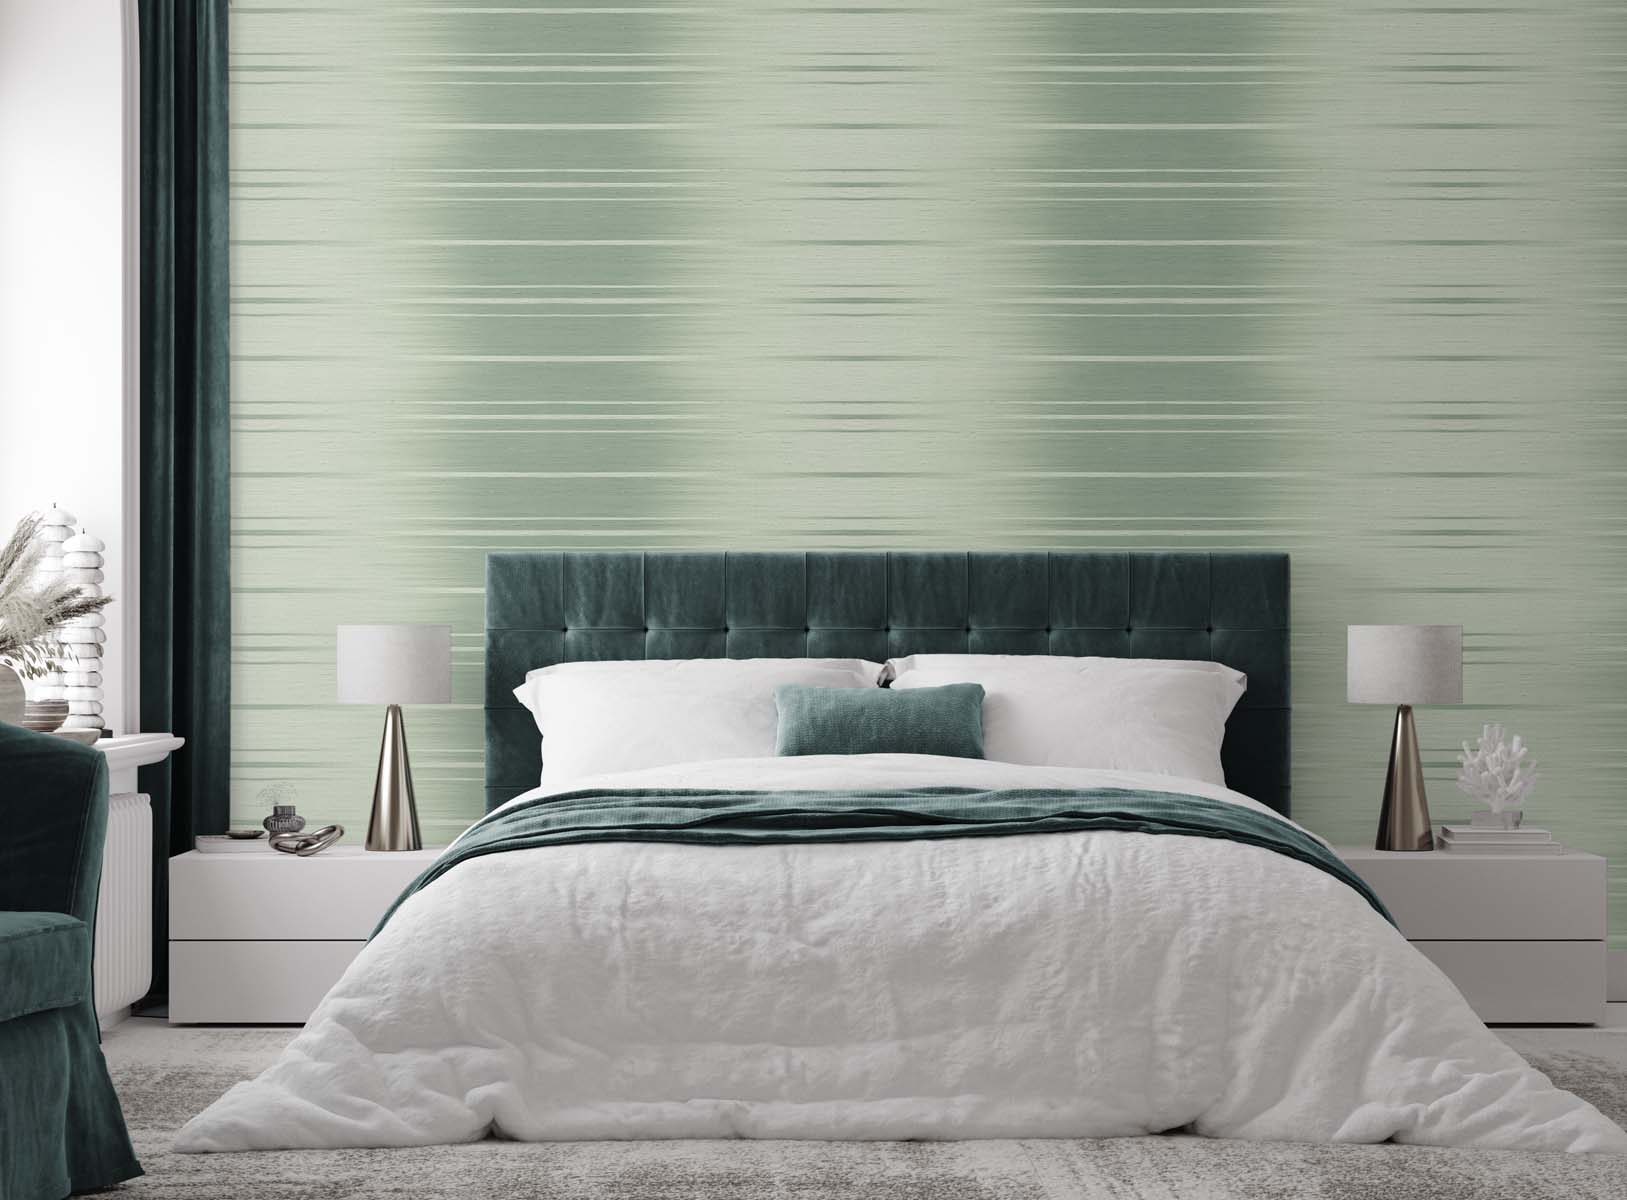 Seabrook Designs Glitter Faux Finish Nonwoven Unpasted Wallpaper - 27 in. W x 27 ft. L - White Linen